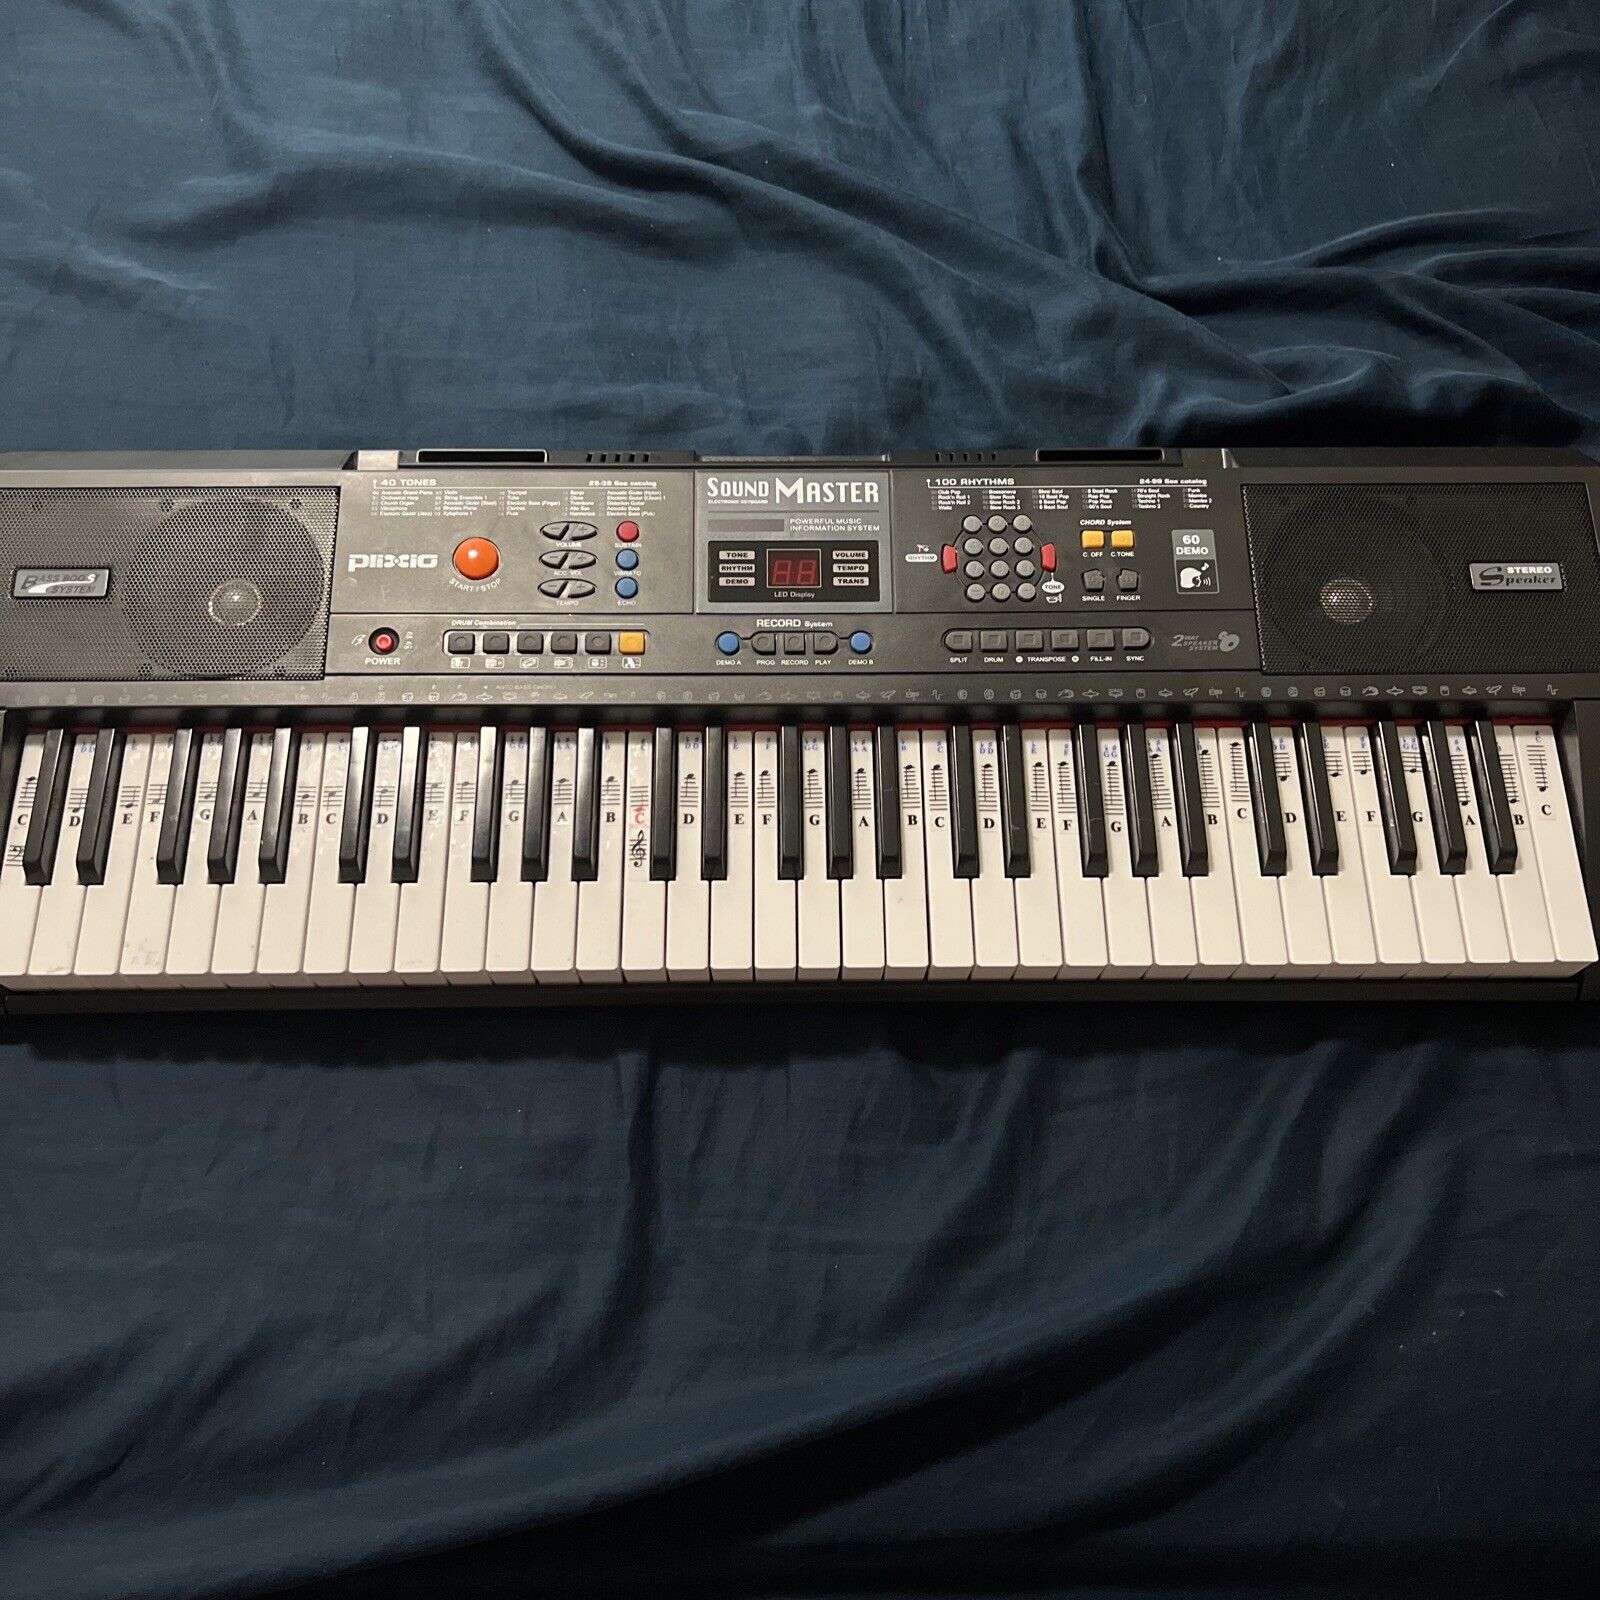 Sound Master Digital Electronic Piano Keyboard Plixio 61-Key